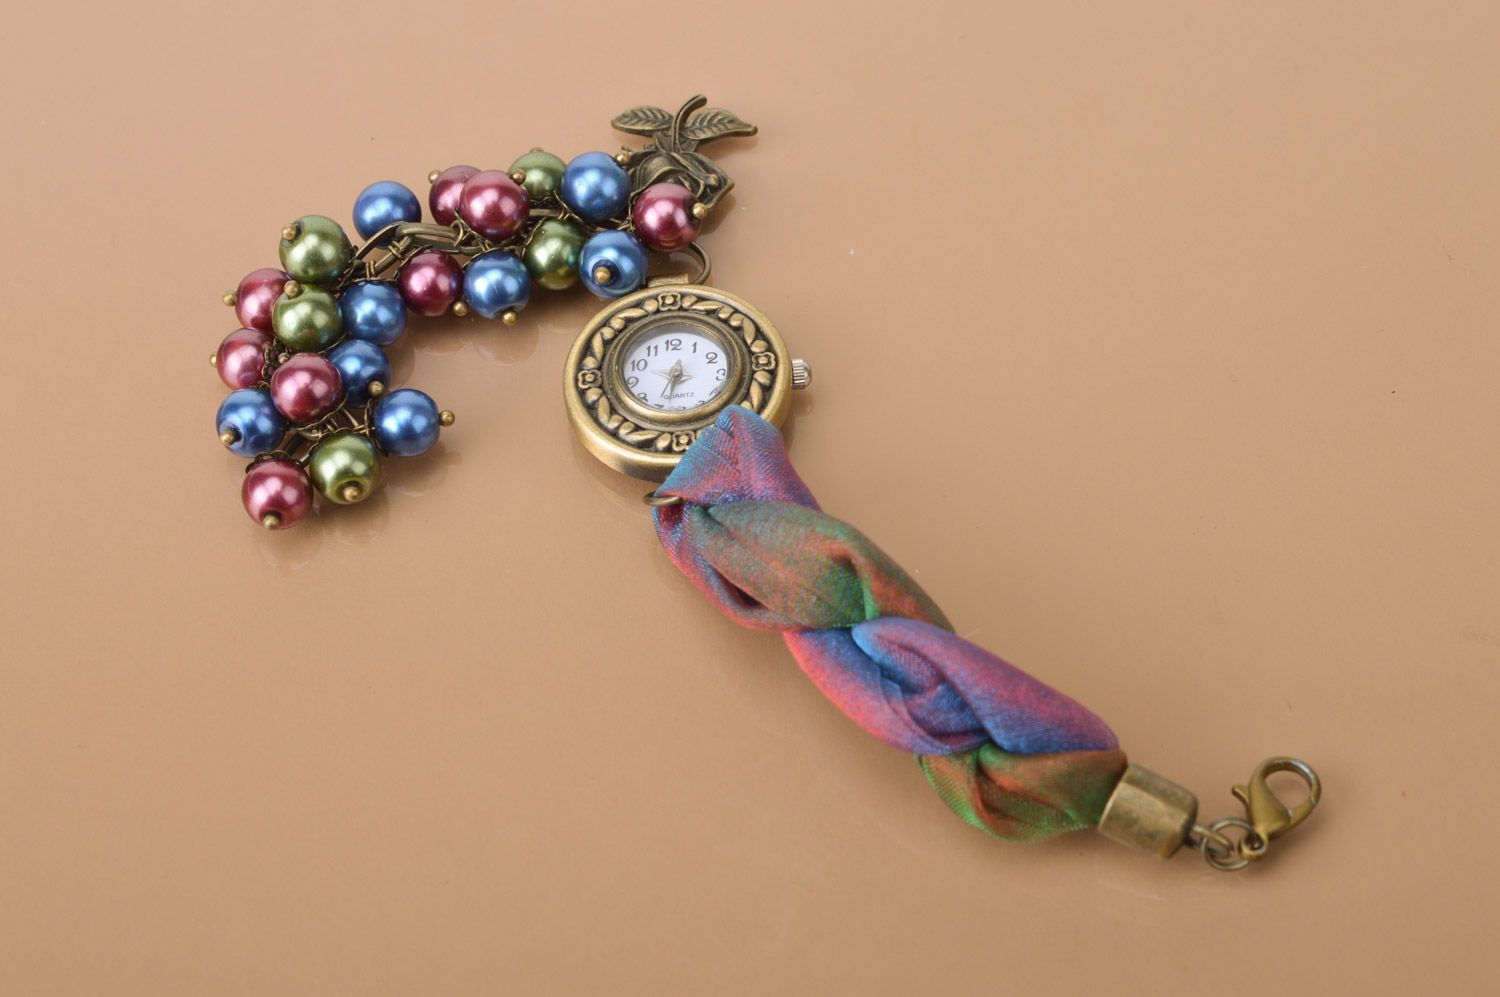 Montre fantaisie pour femme avec perles multicolores originale ronde faite main photo 5